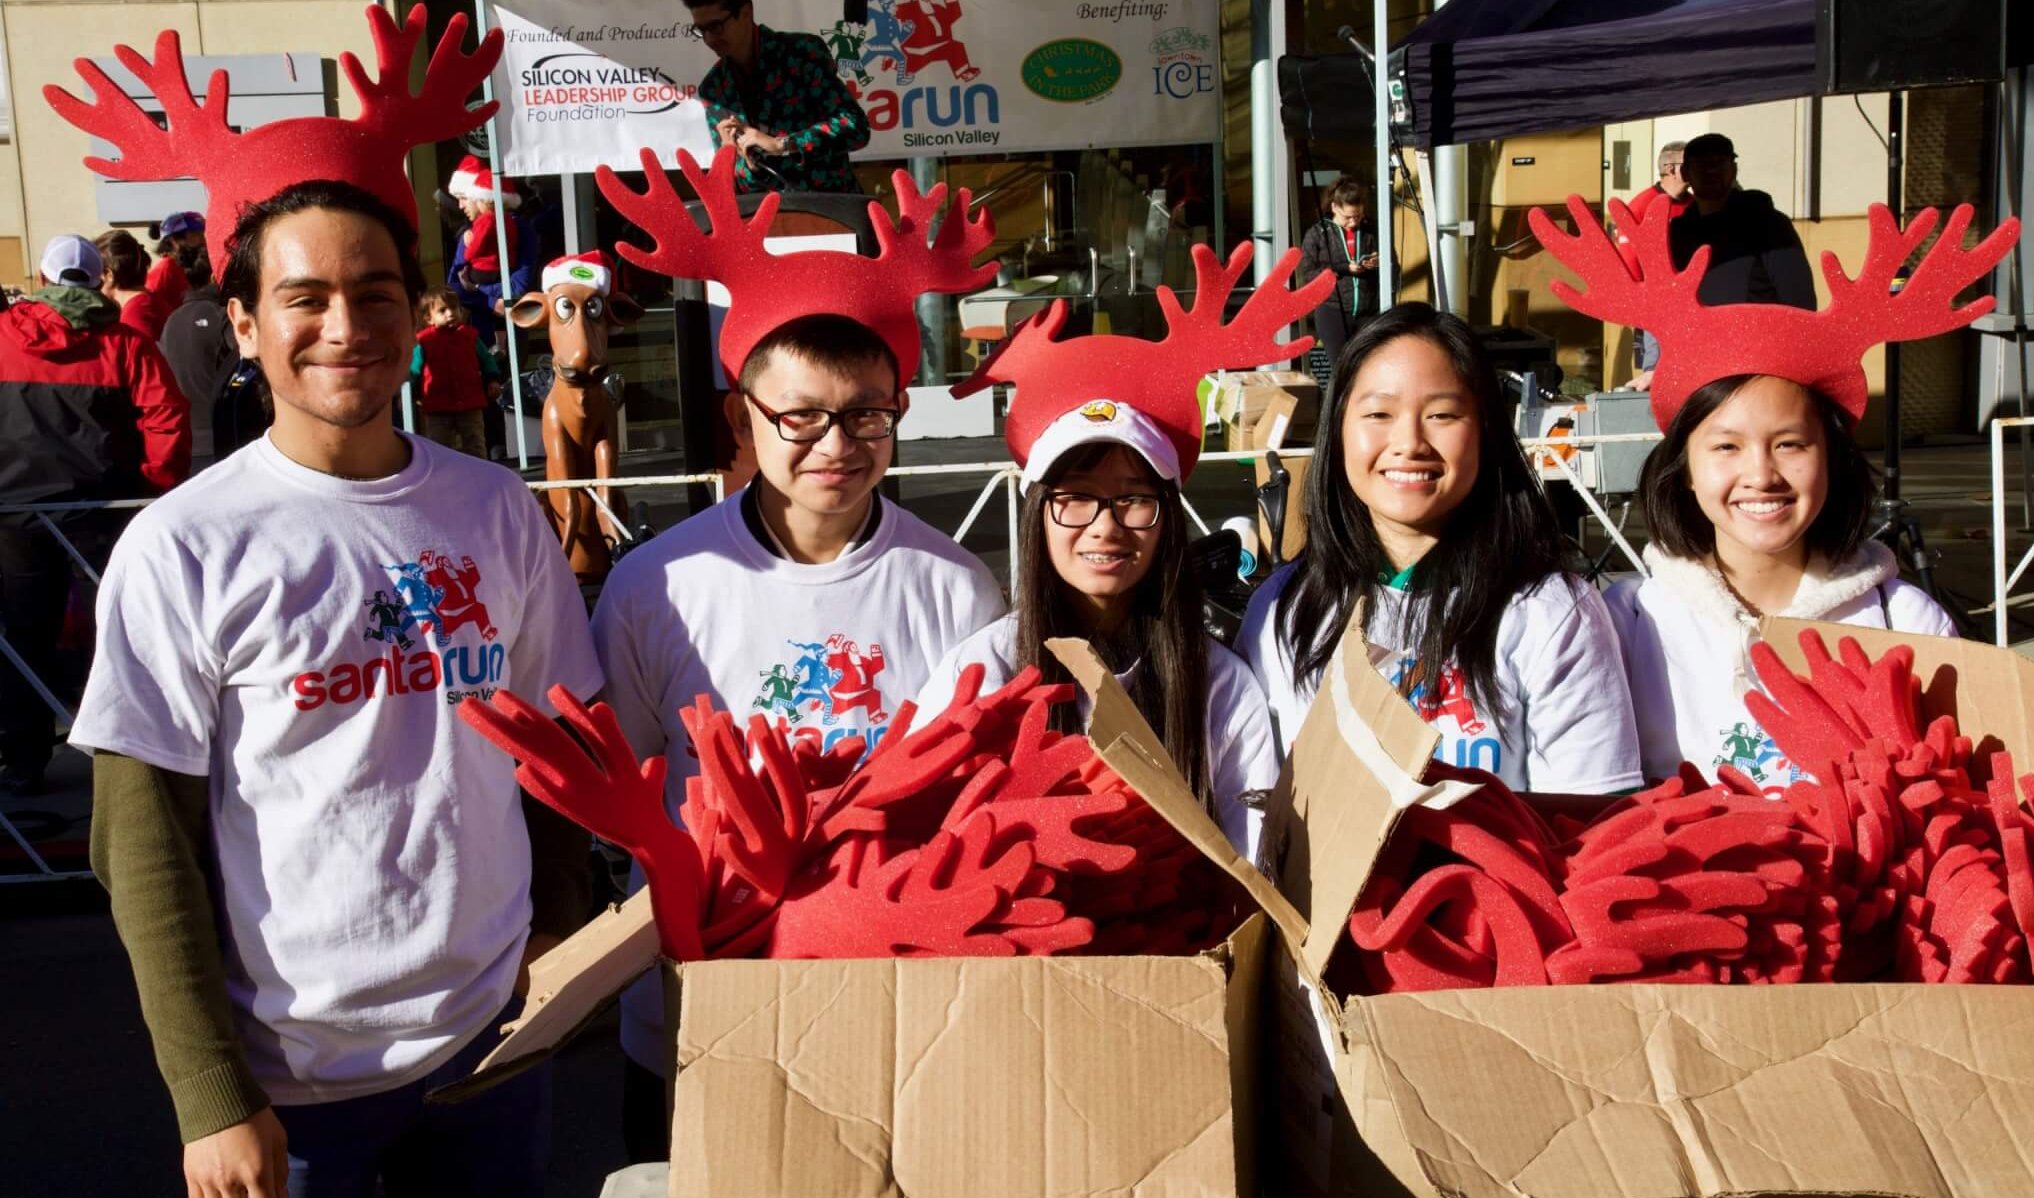 santa run silicon valley volunteers behind boxes of red reindeer hats